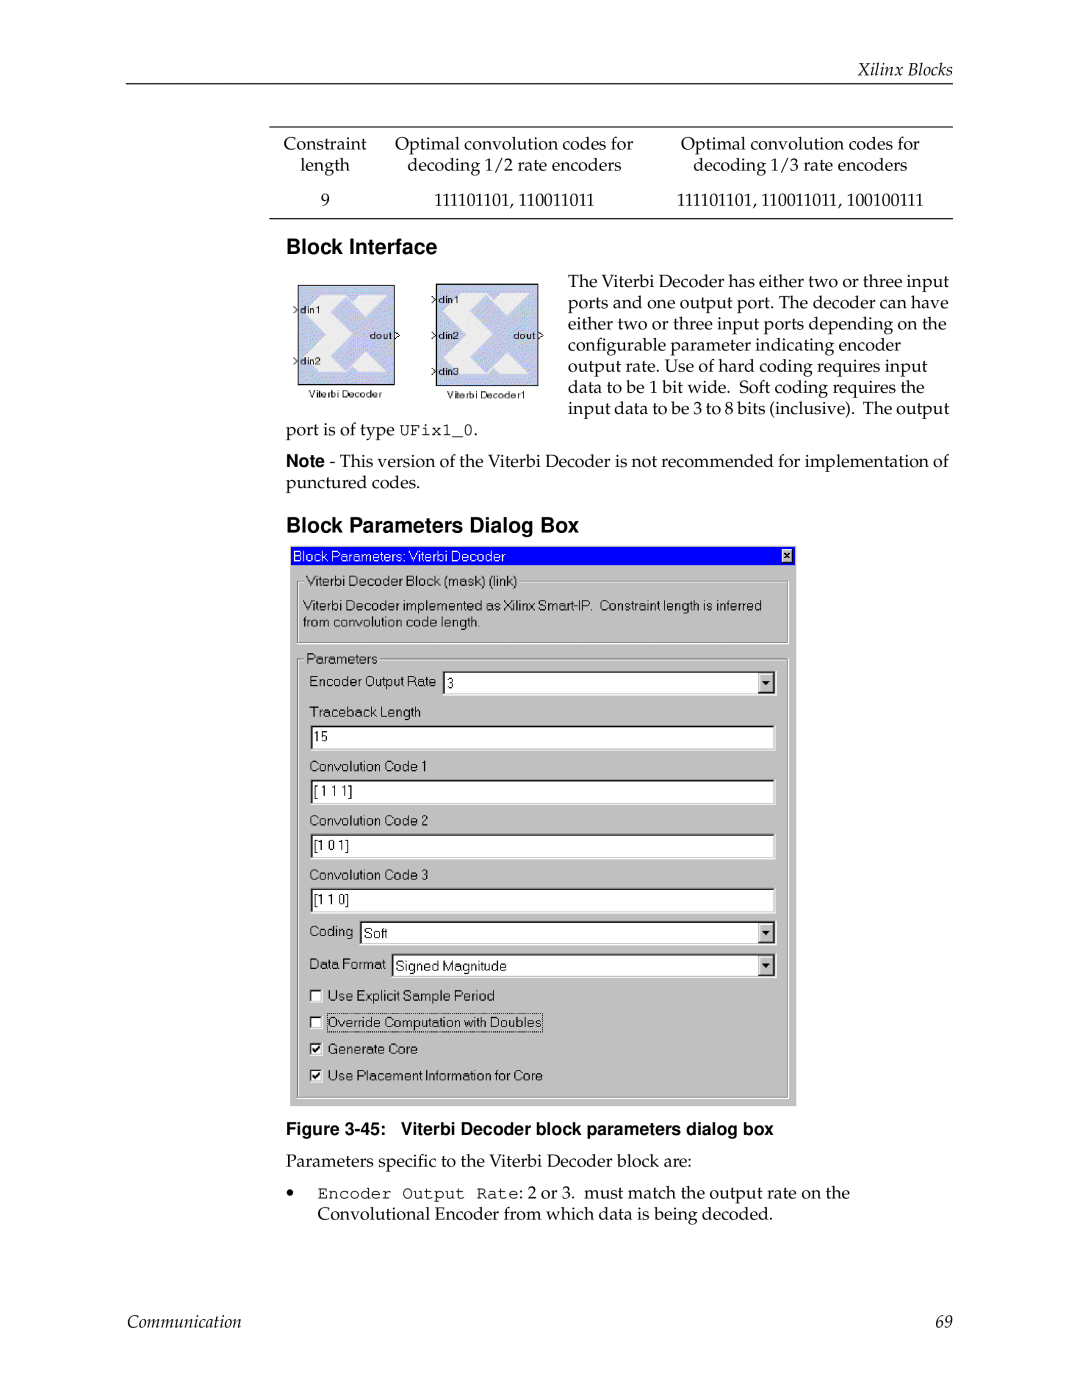 Xilinx V2.1 manual Block Interface, Block Parameters Dialog Box, Communication 